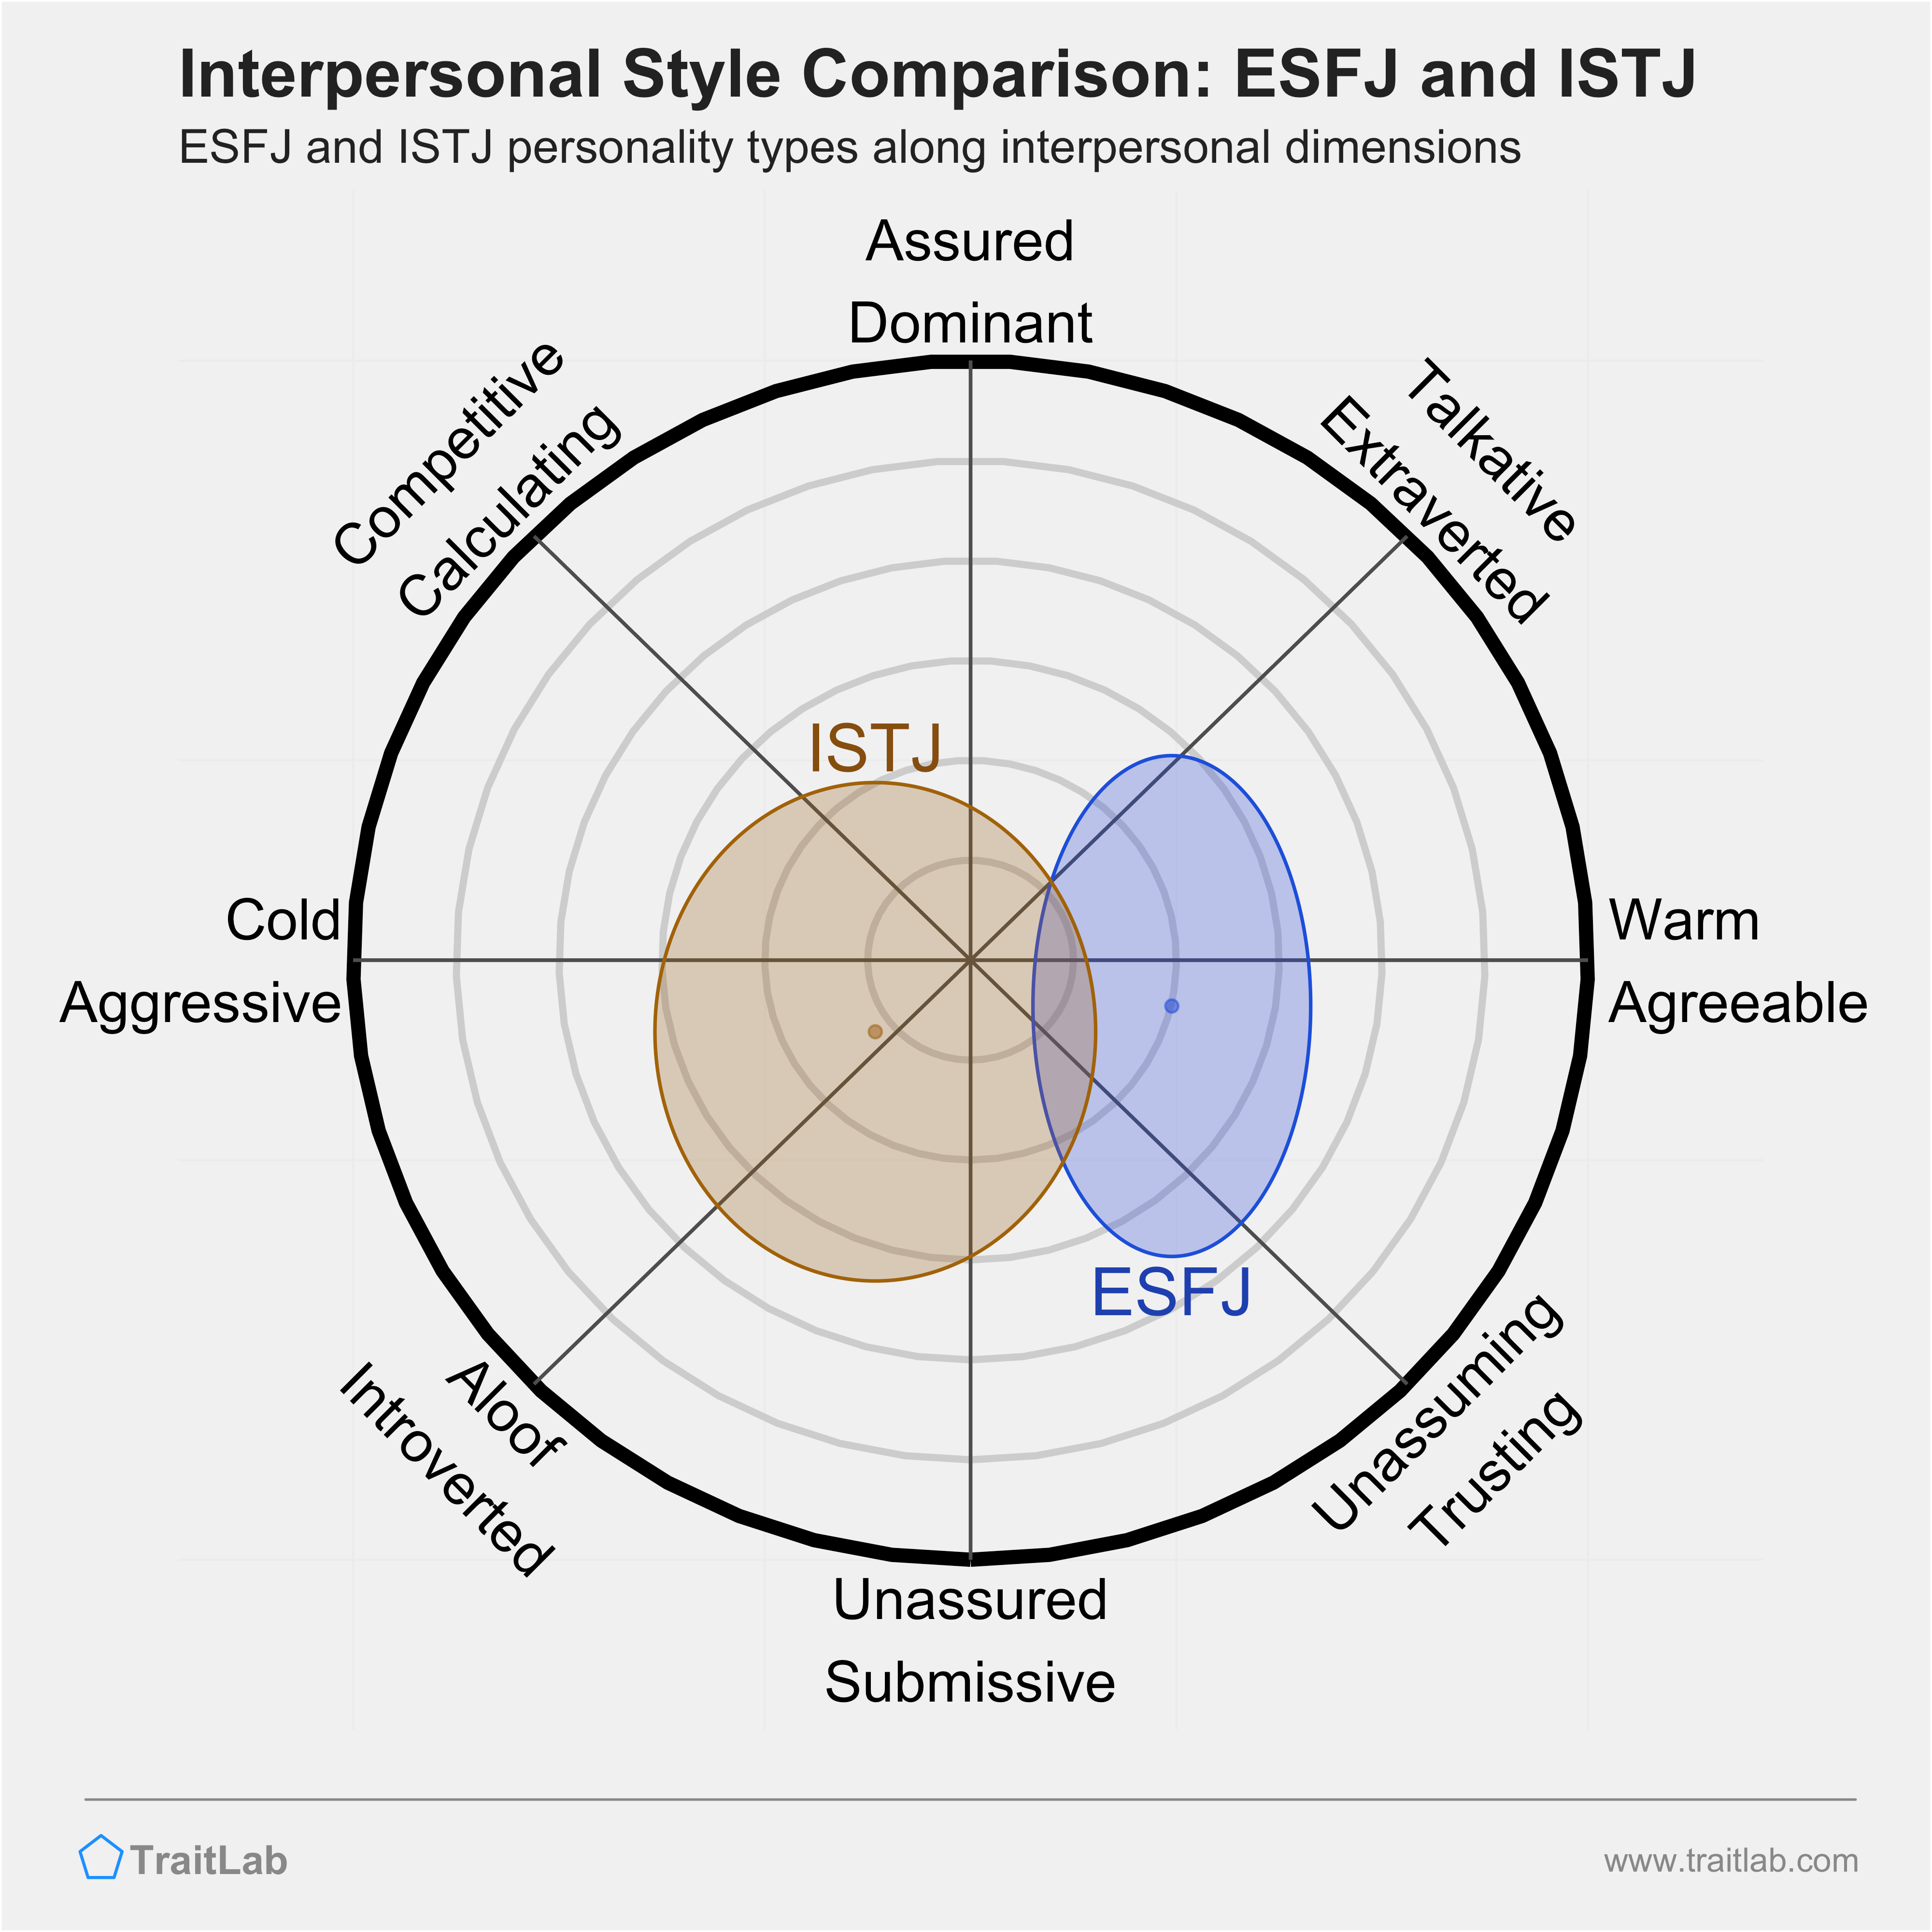 ESFJ and ISTJ comparison across interpersonal dimensions